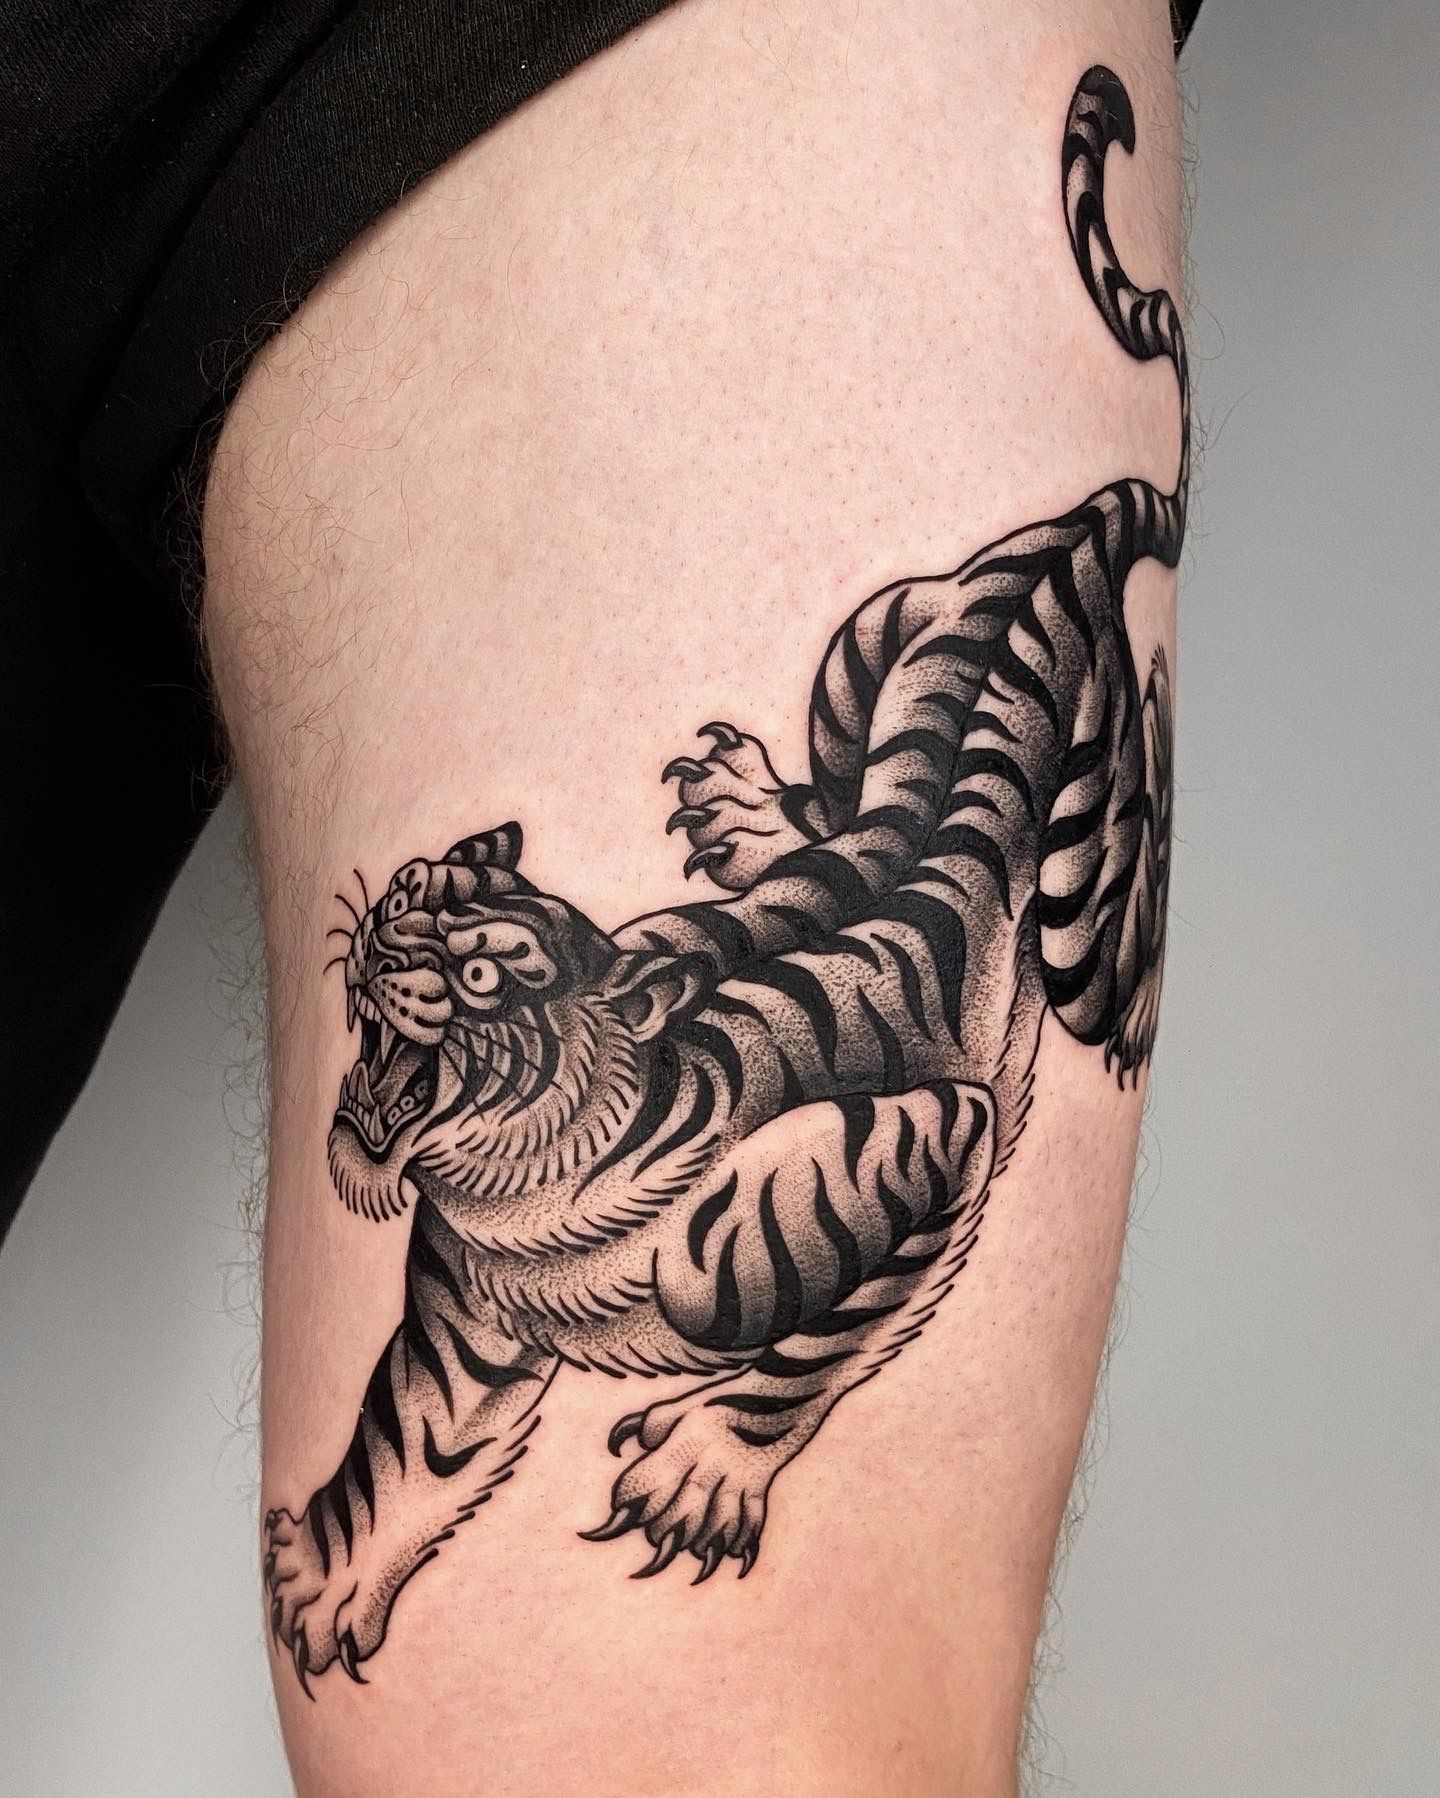 Tattoo uploaded by illson • Tiger on thigh • Tattoodo